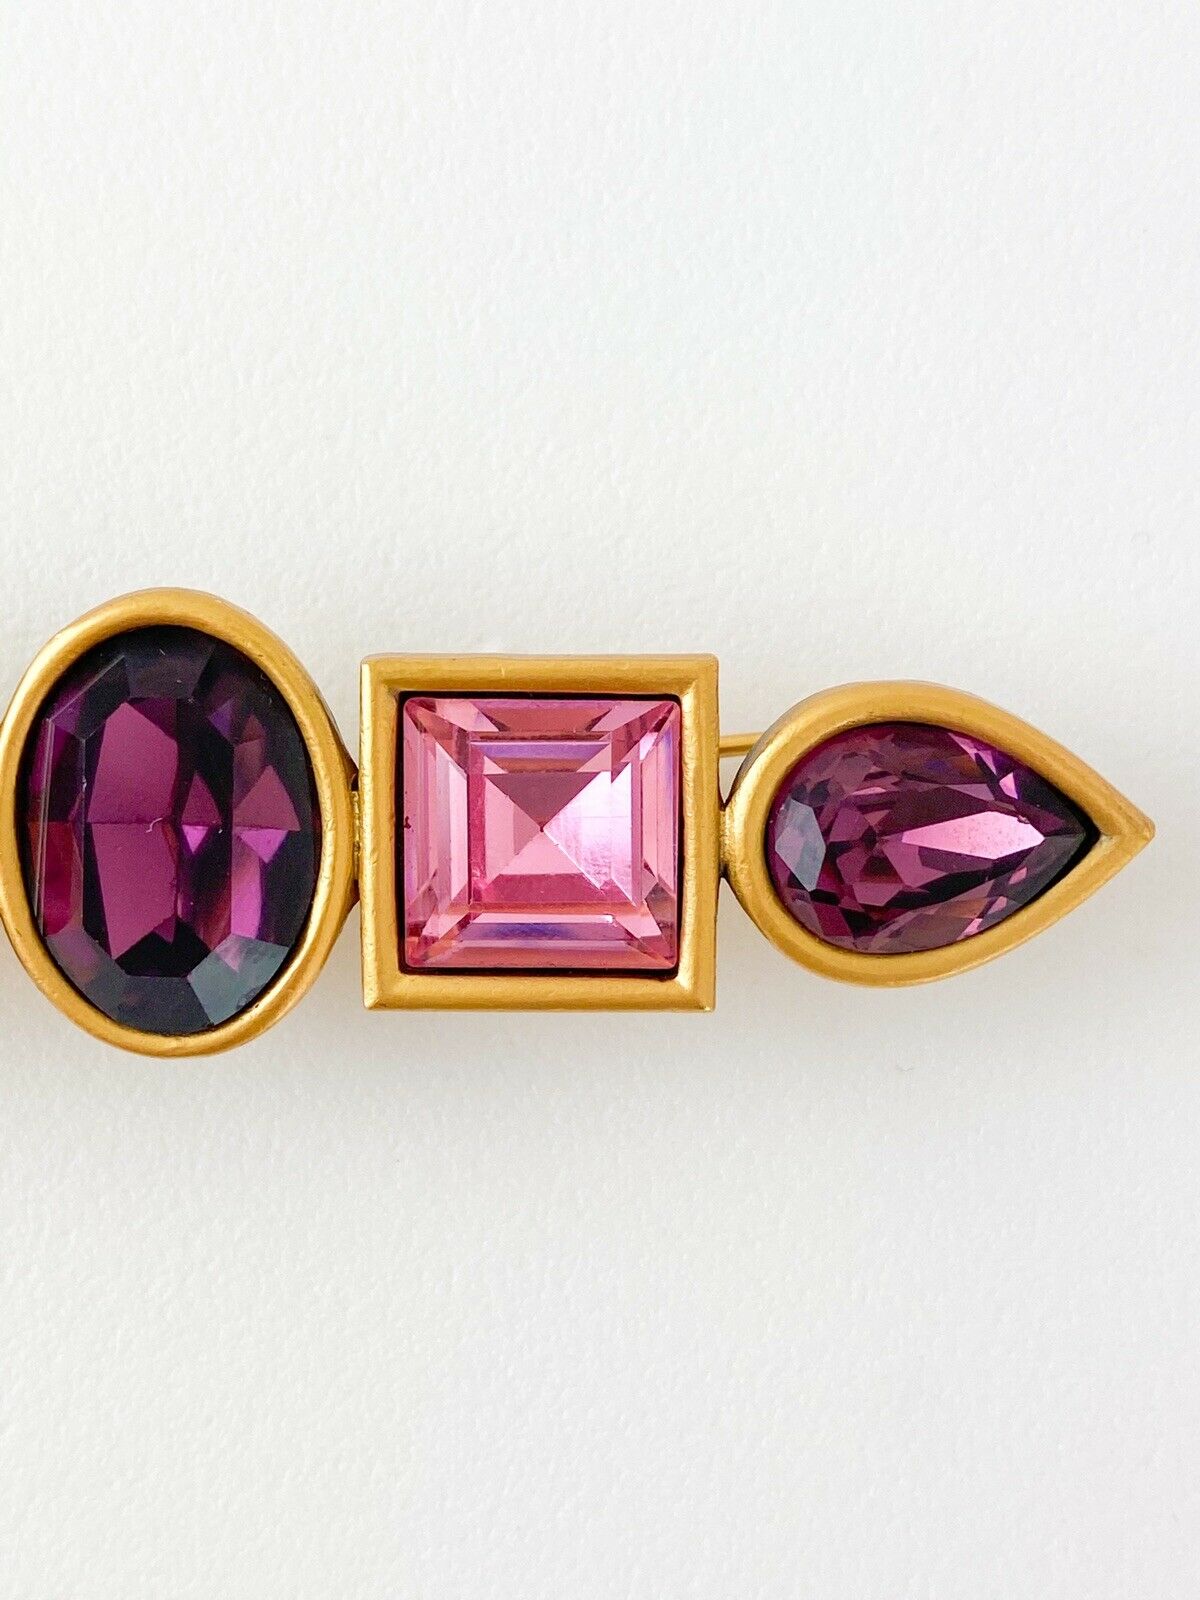 【SOLD OUT】YSL Yves Saint Laurent Vintage Brooch Pin Rhinestones Purple Pink